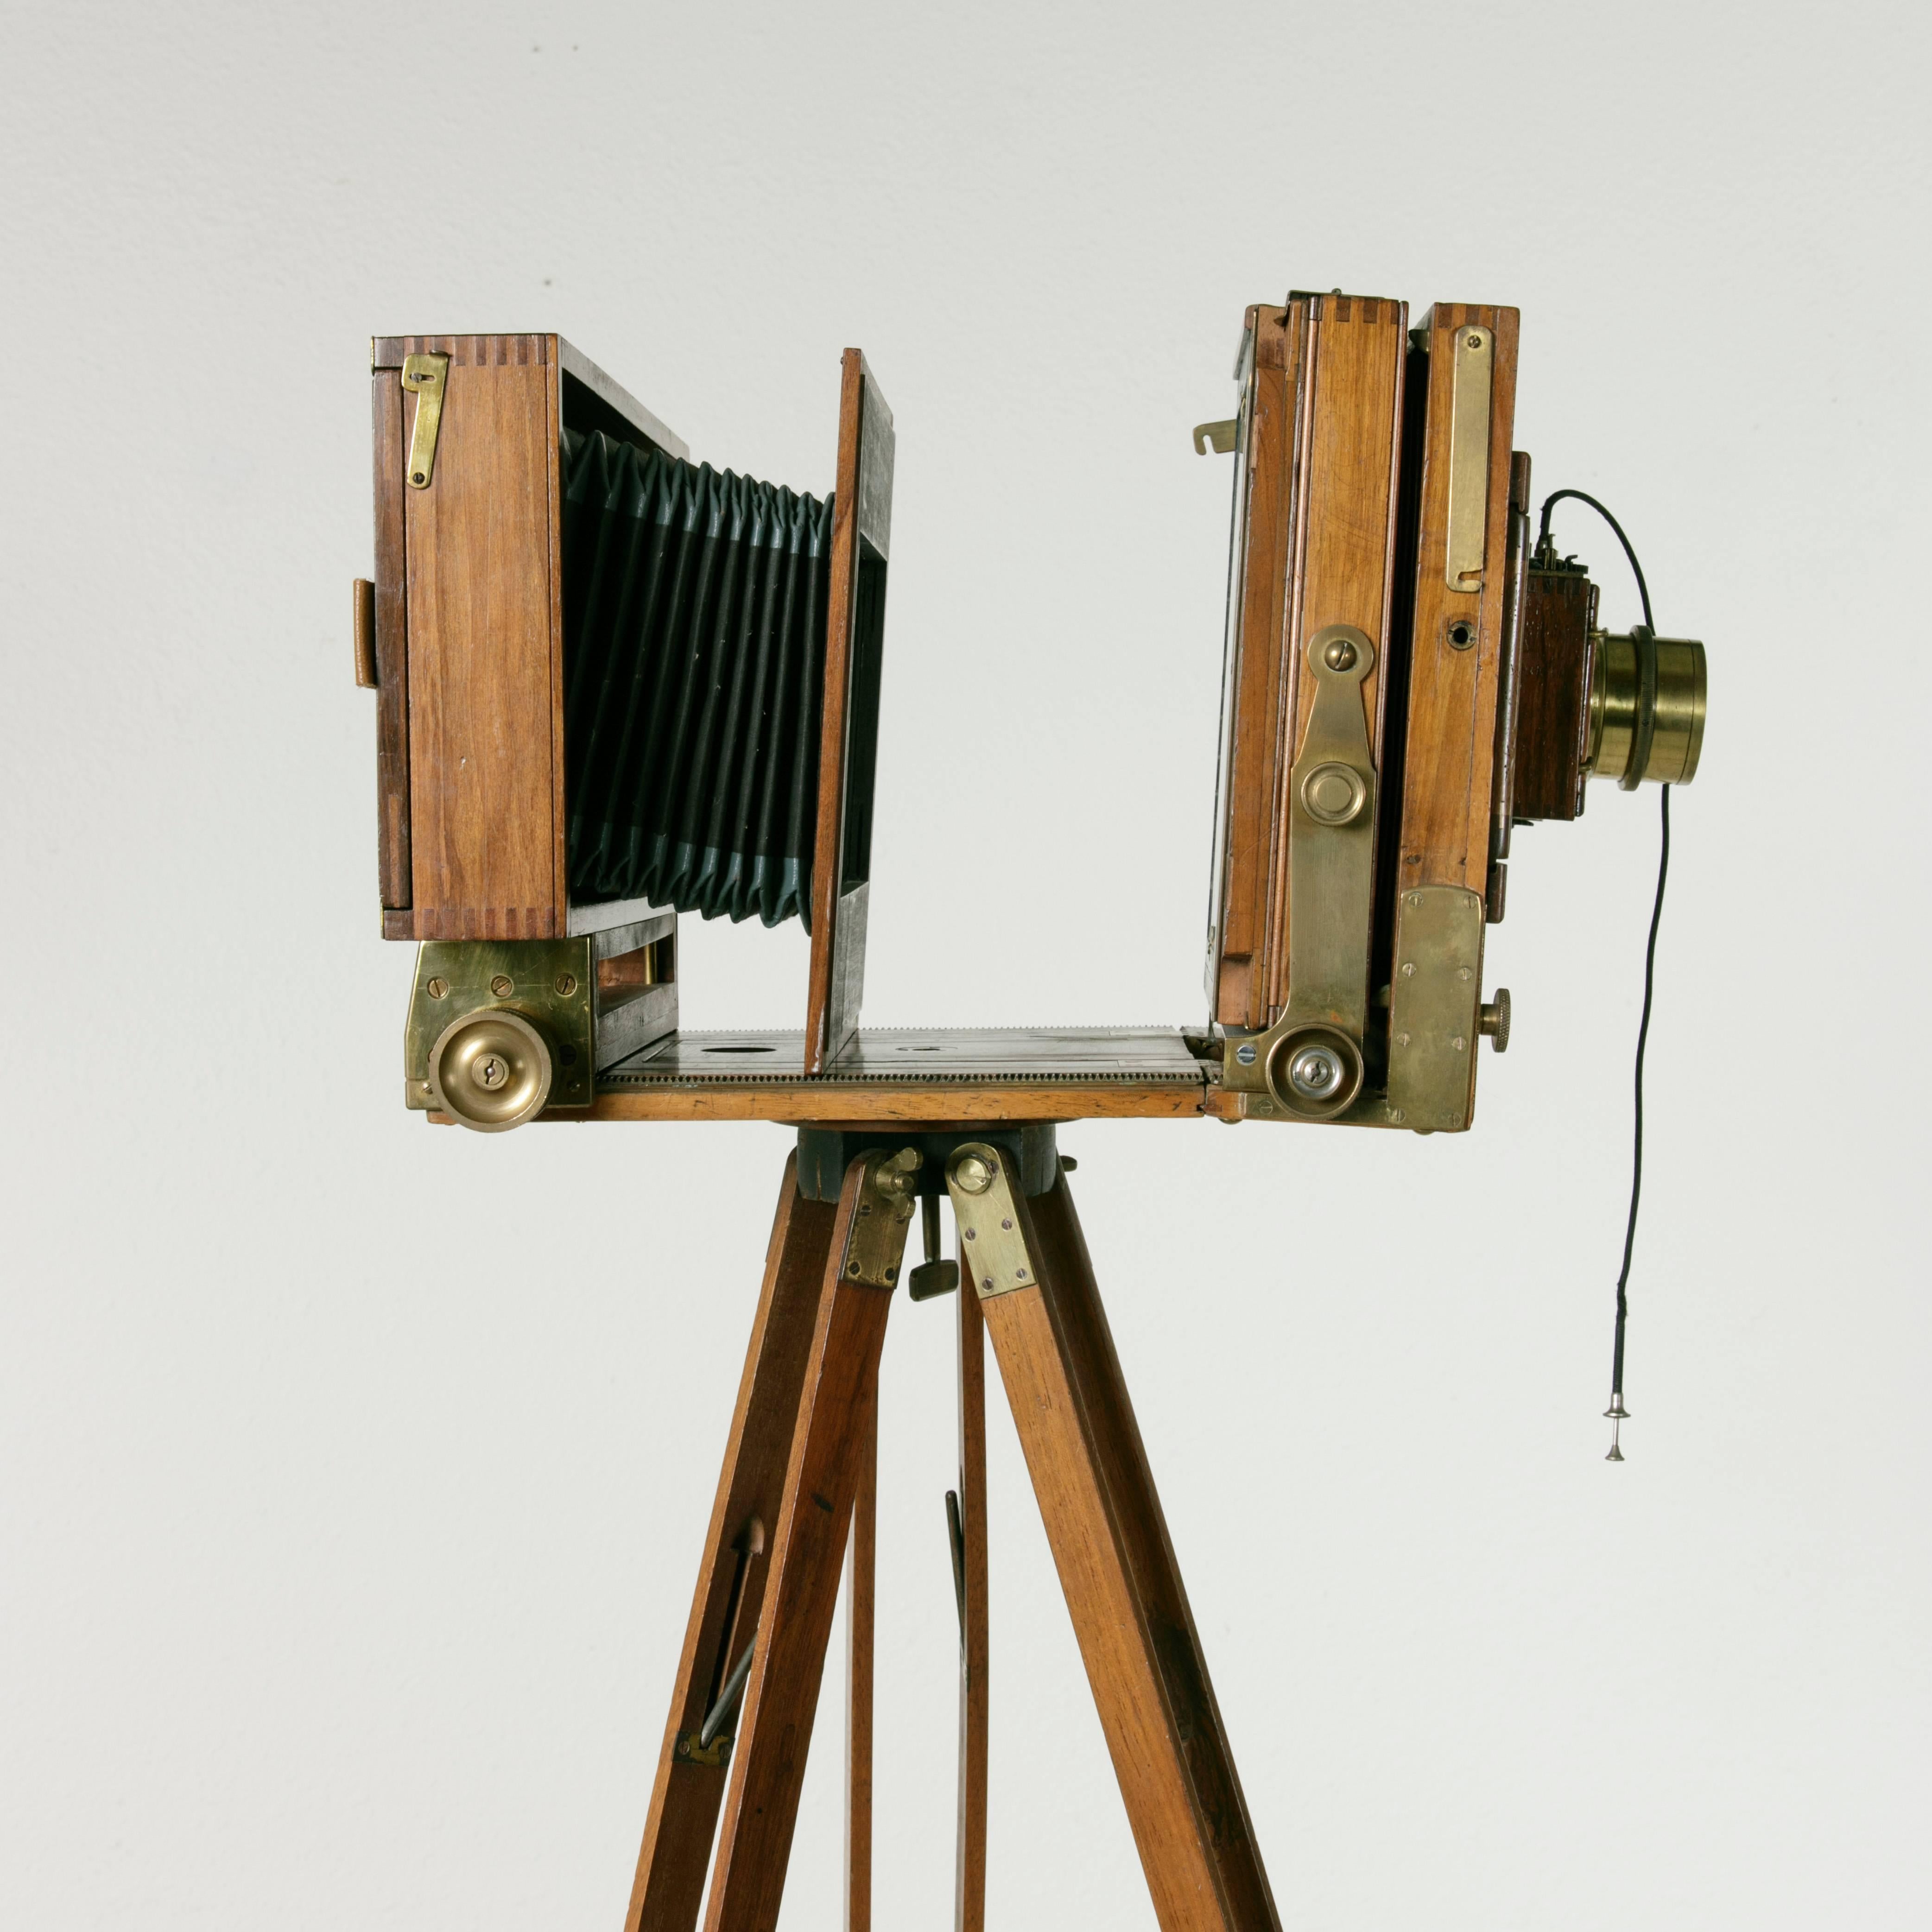 1898 camera